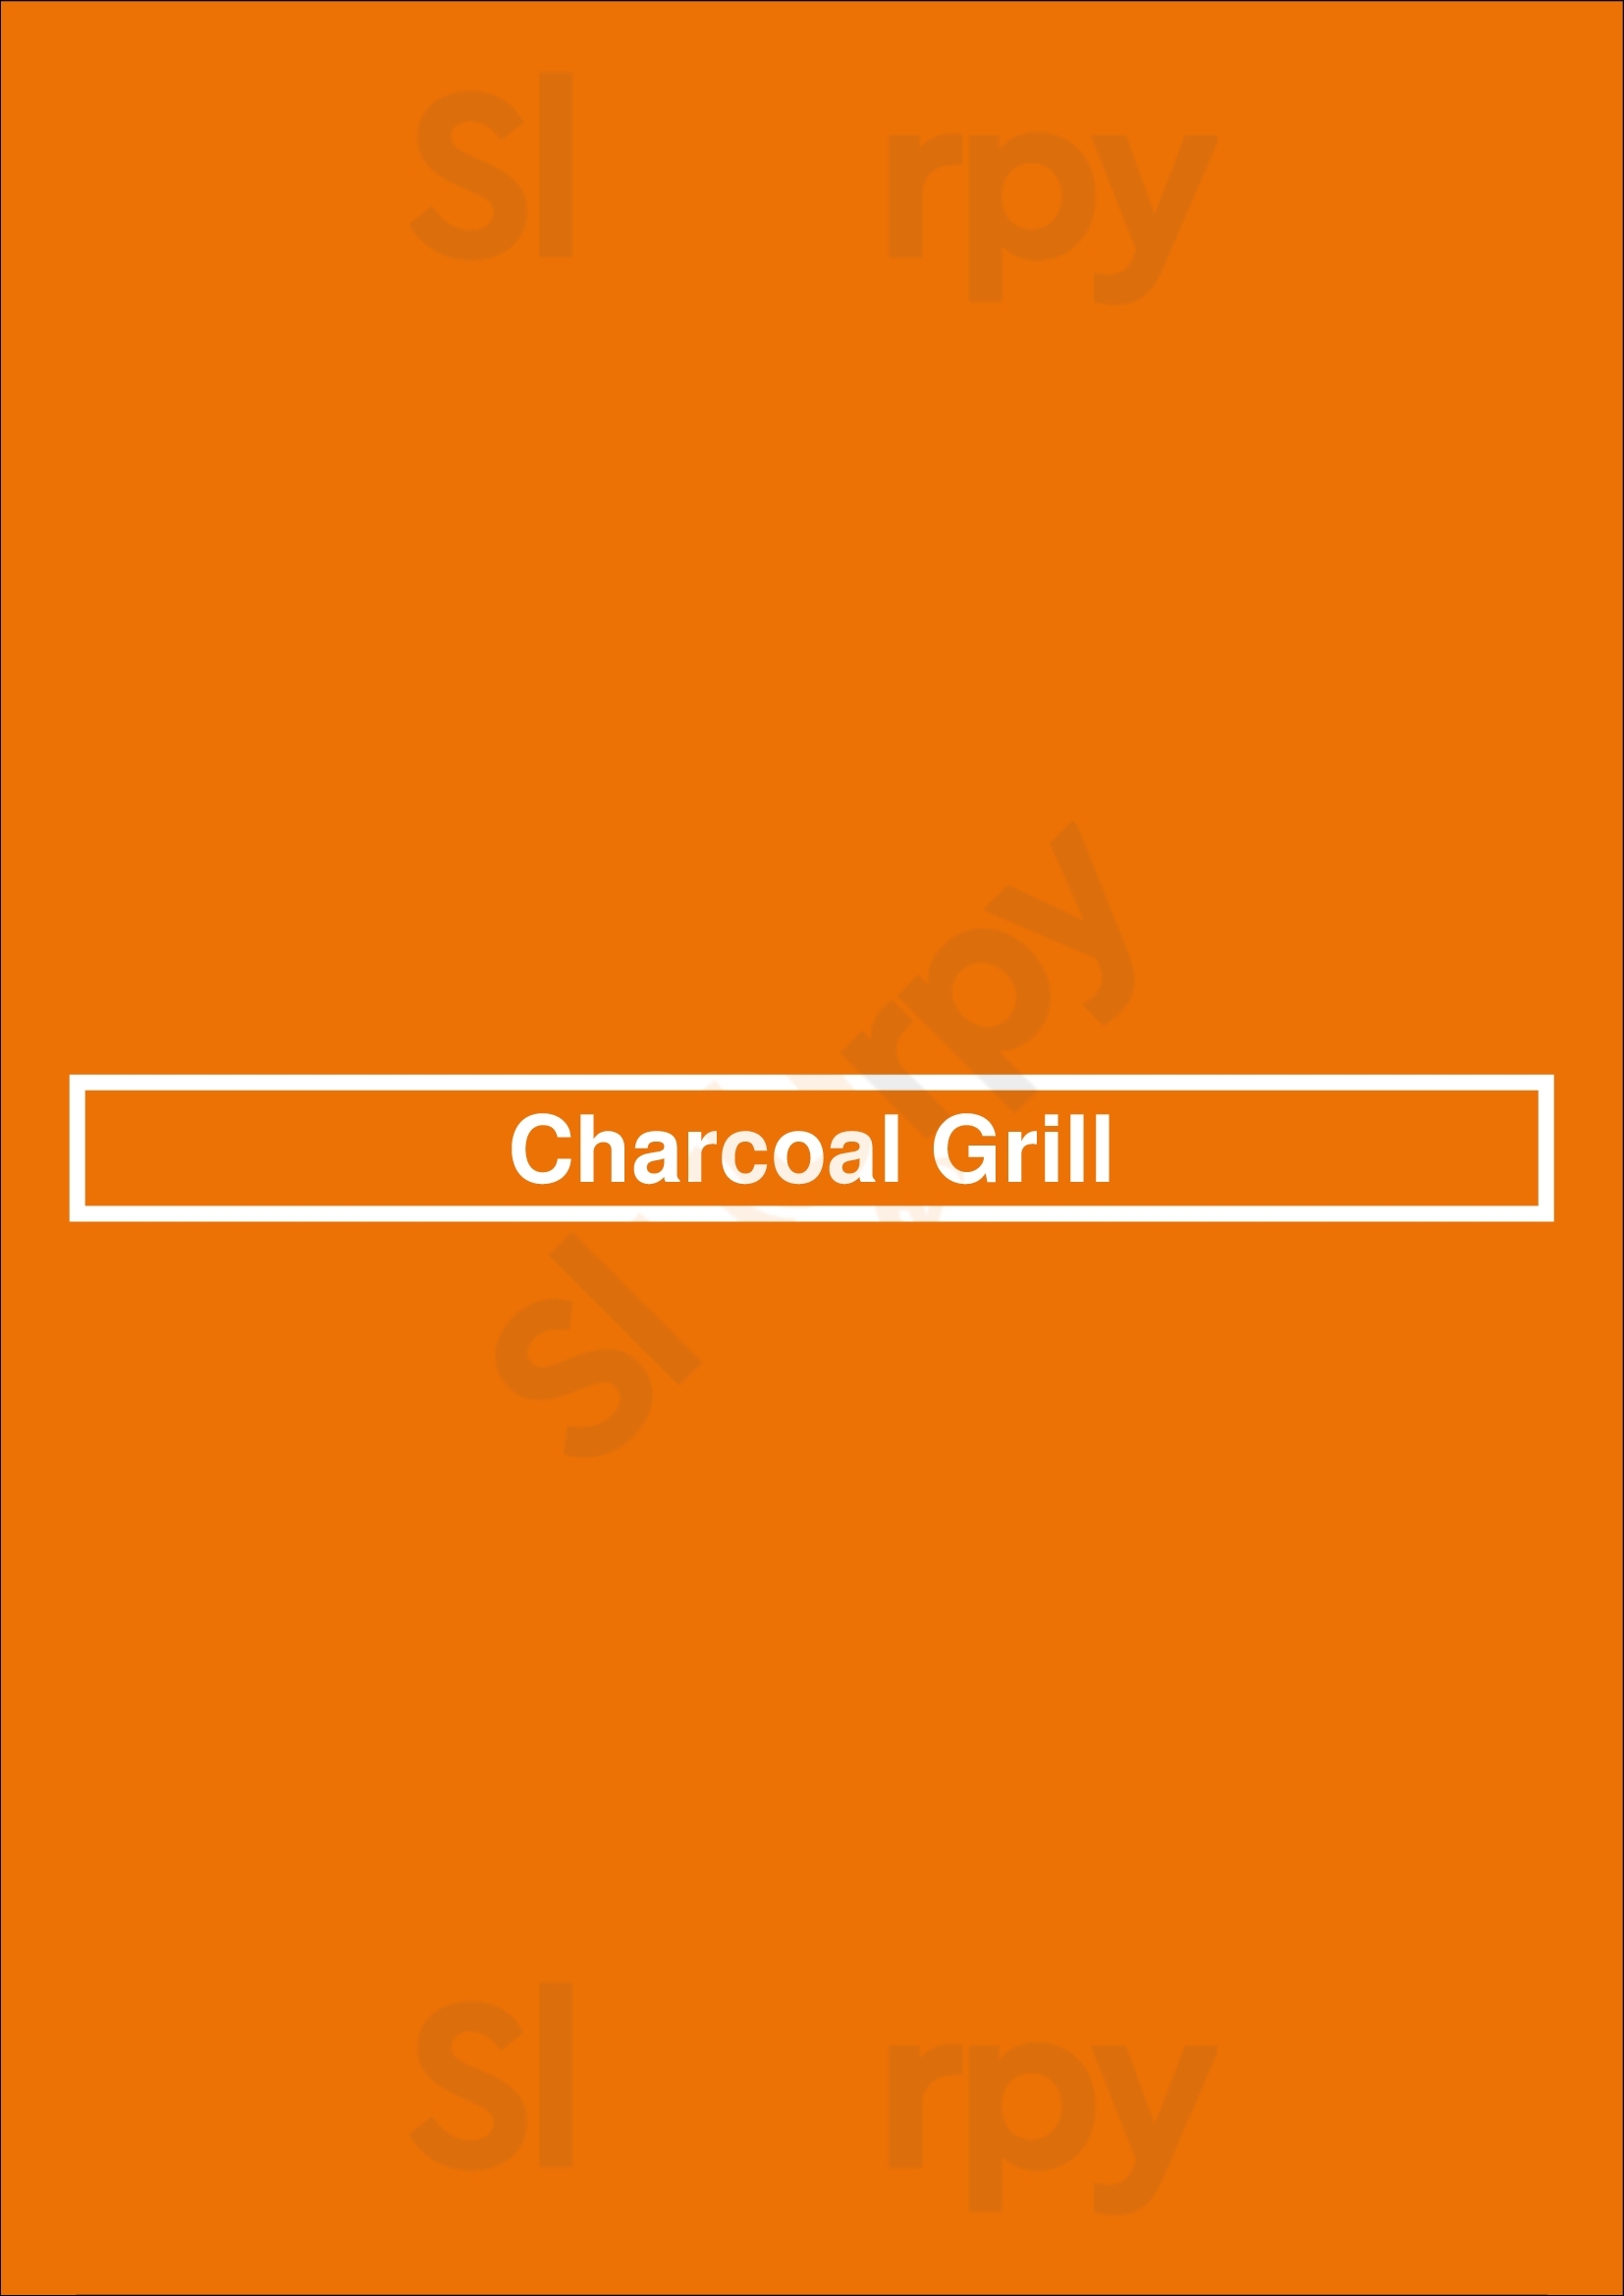 Charcoal Grill Ilford Menu - 1